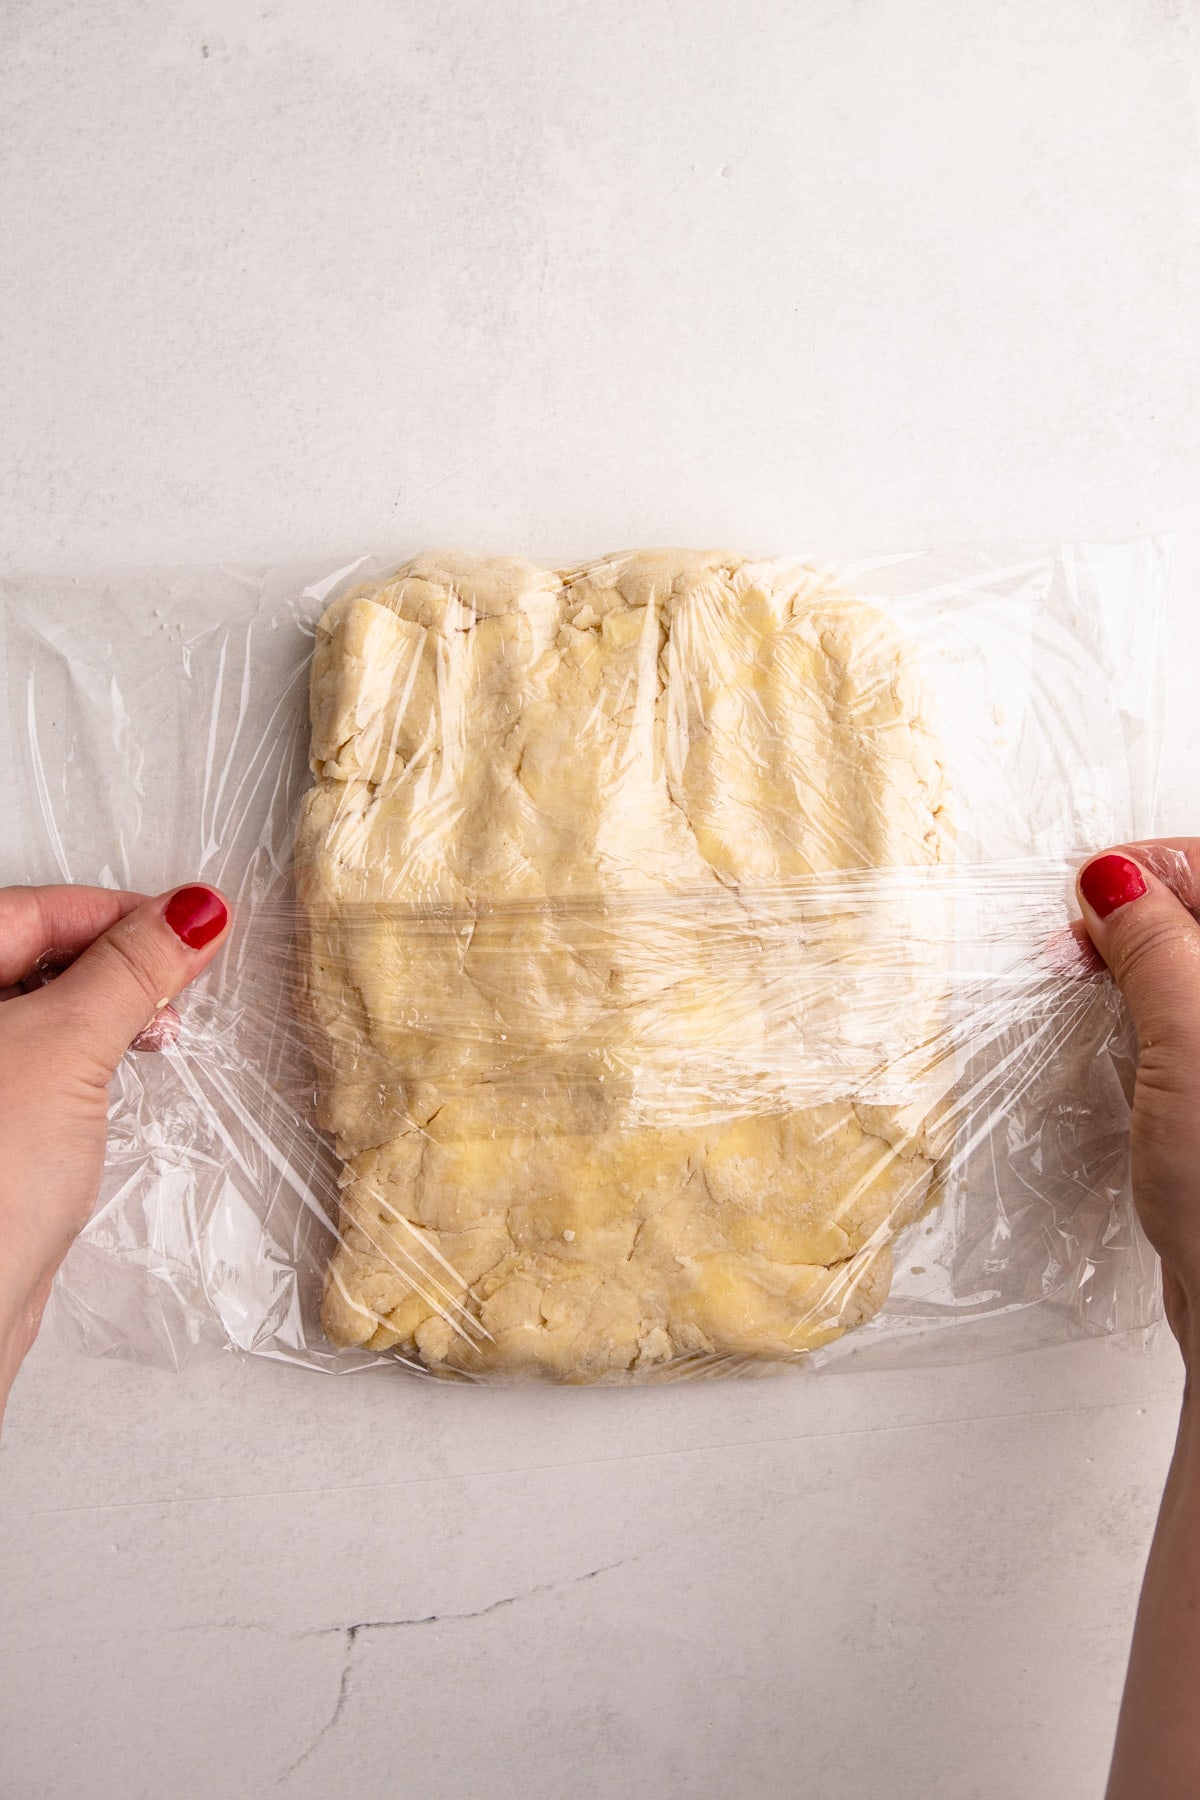 A rectangle of flaky pie dough.